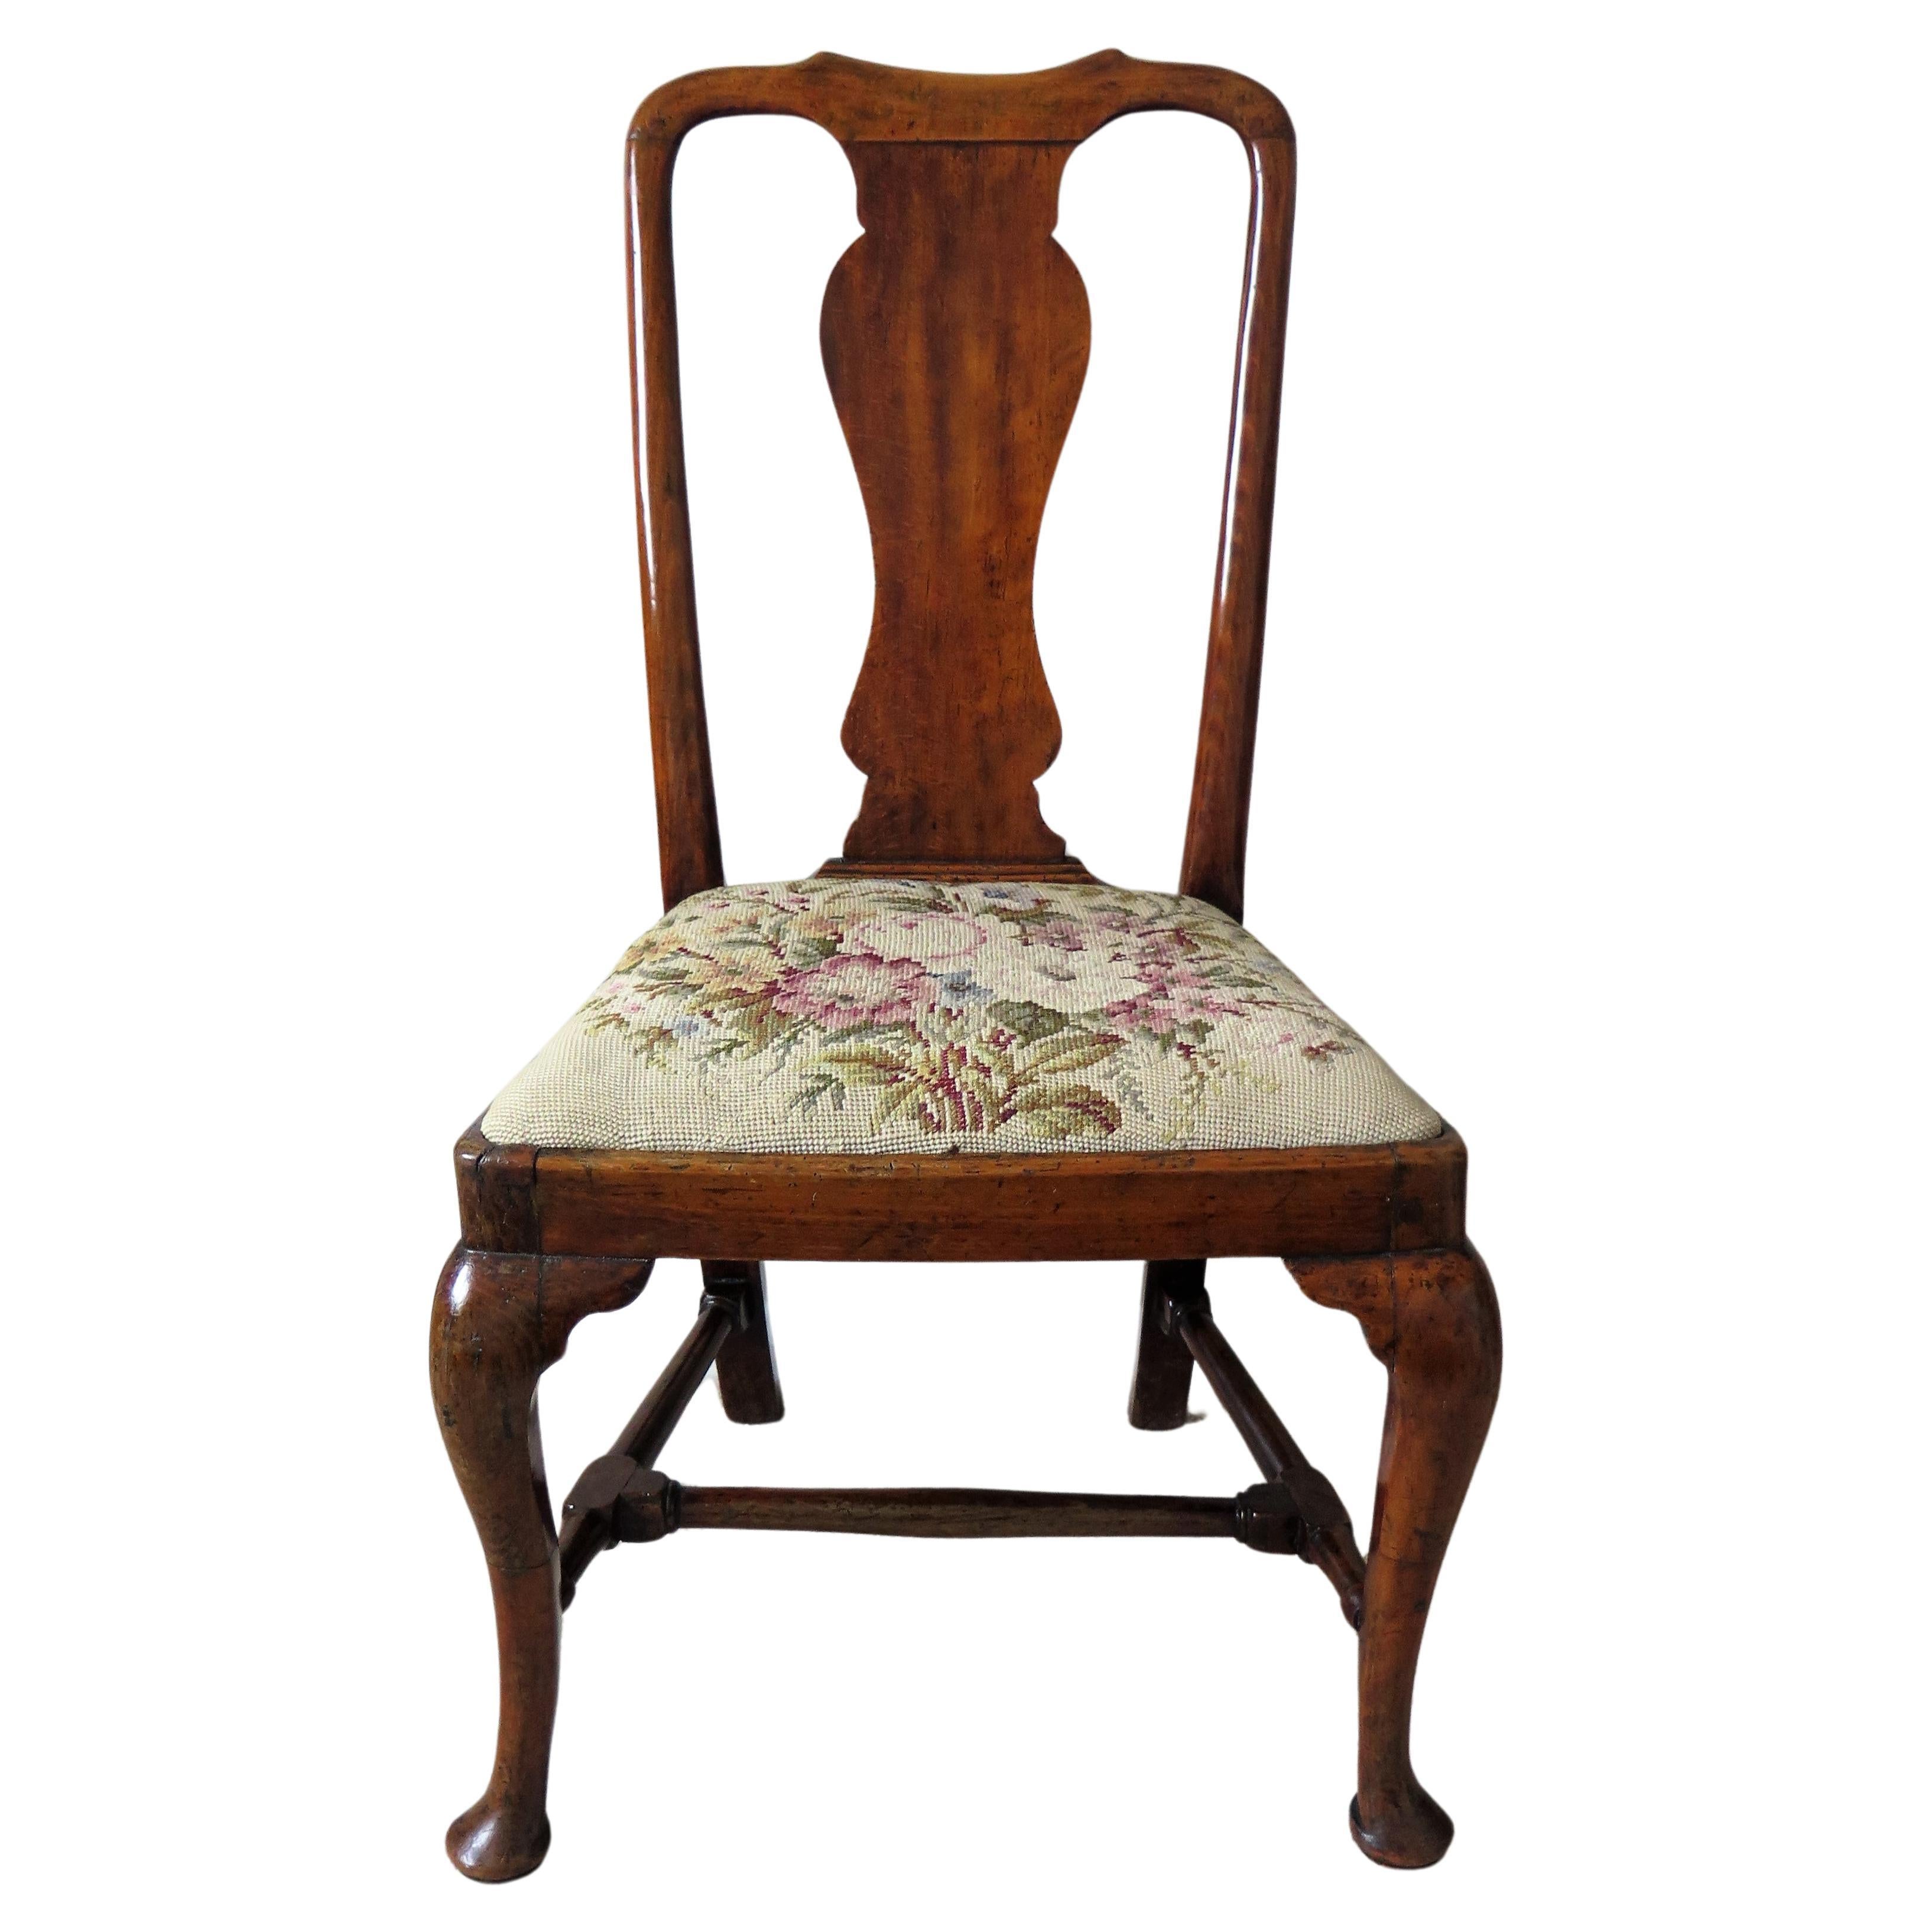 Queen Anne Period Walnut Chair Cabriole Legs and Stretchers, English circa 1700